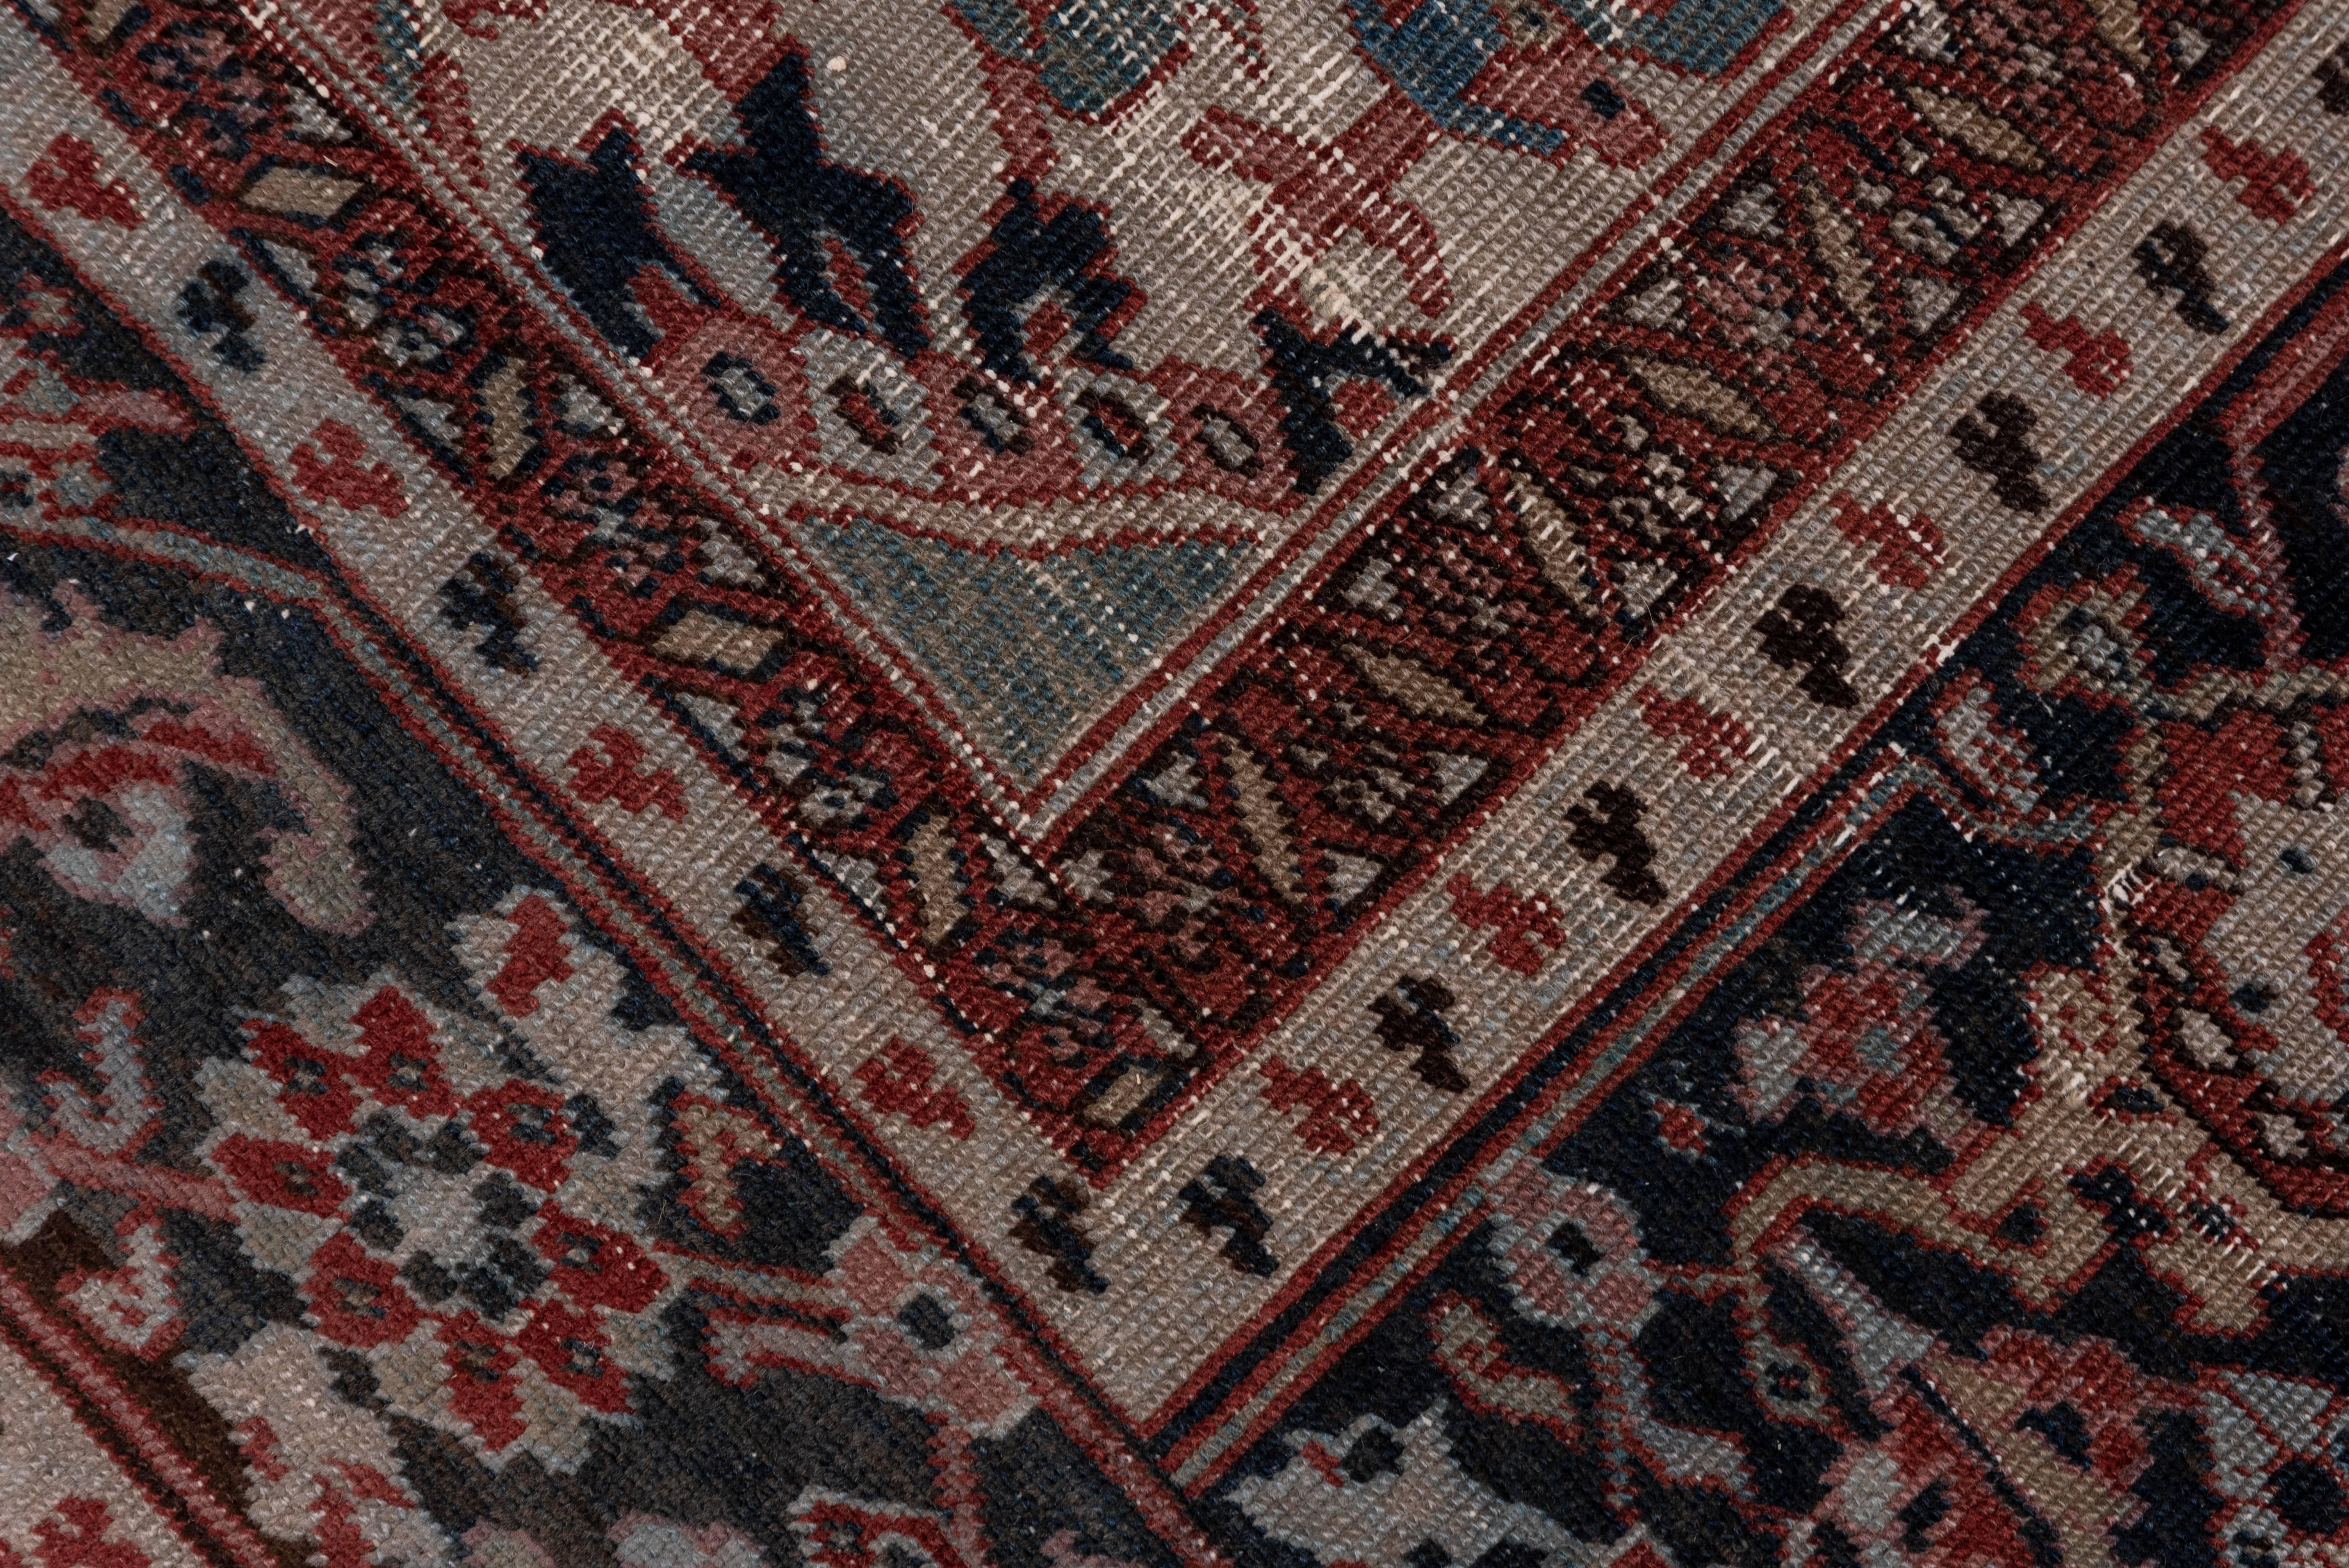 Antique Persian Heriz Carpet, Shabby Chic 4